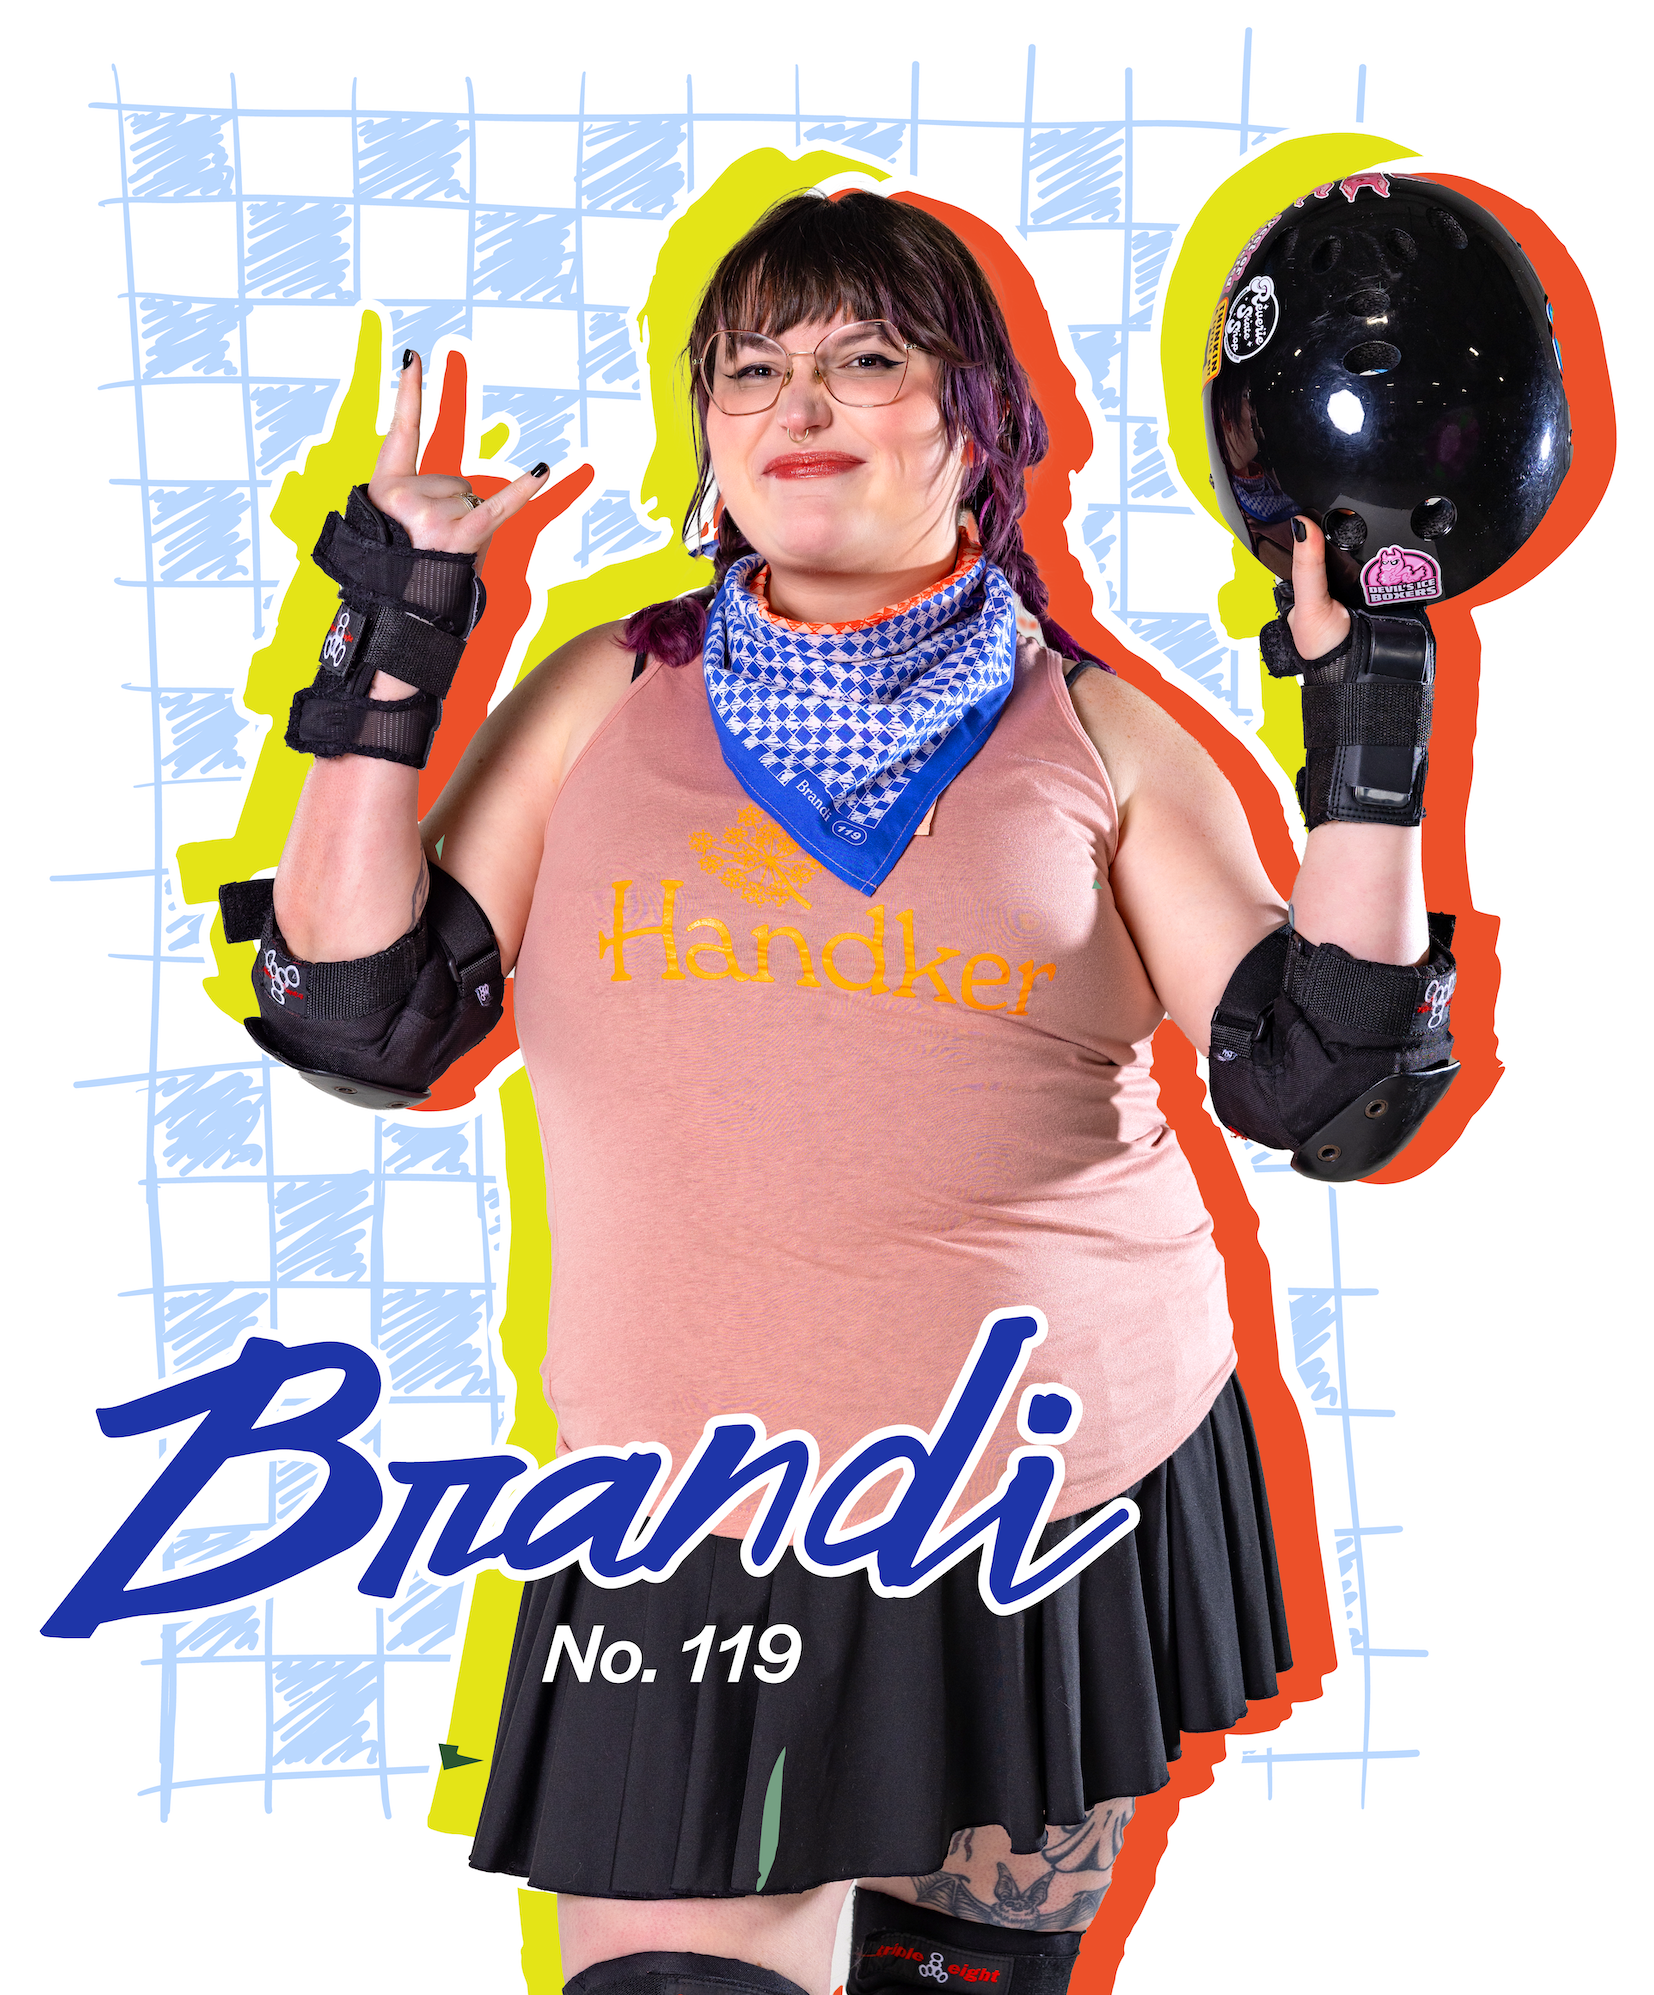 No. 119 Brandi Bandana